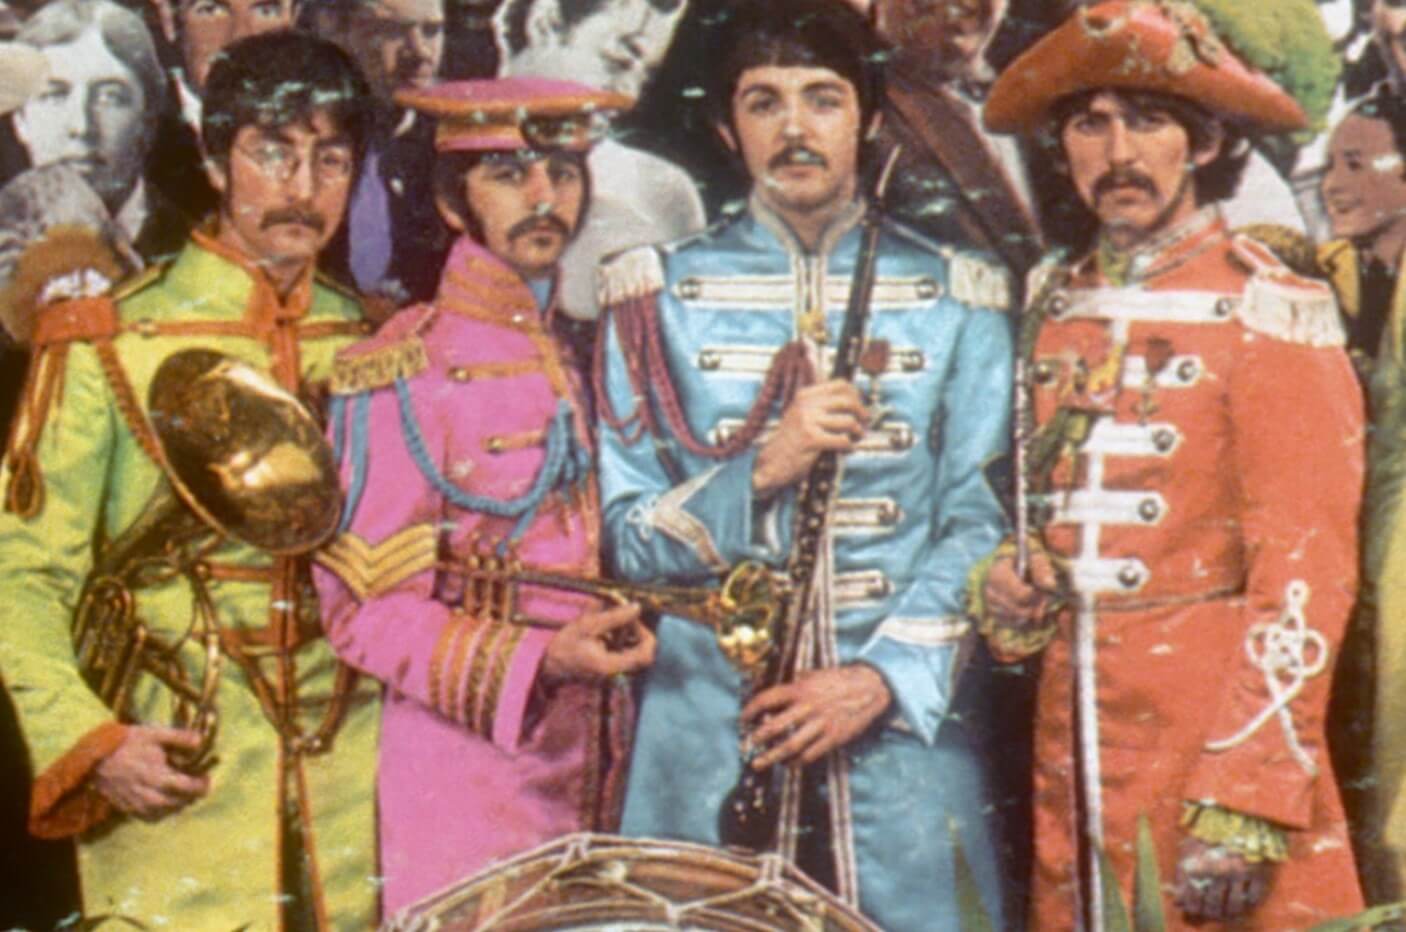 John Lennon, Ringo Starr, Paul McCartney, and George Harrison on the cover of The Beatles' 'Sgt. Pepper'